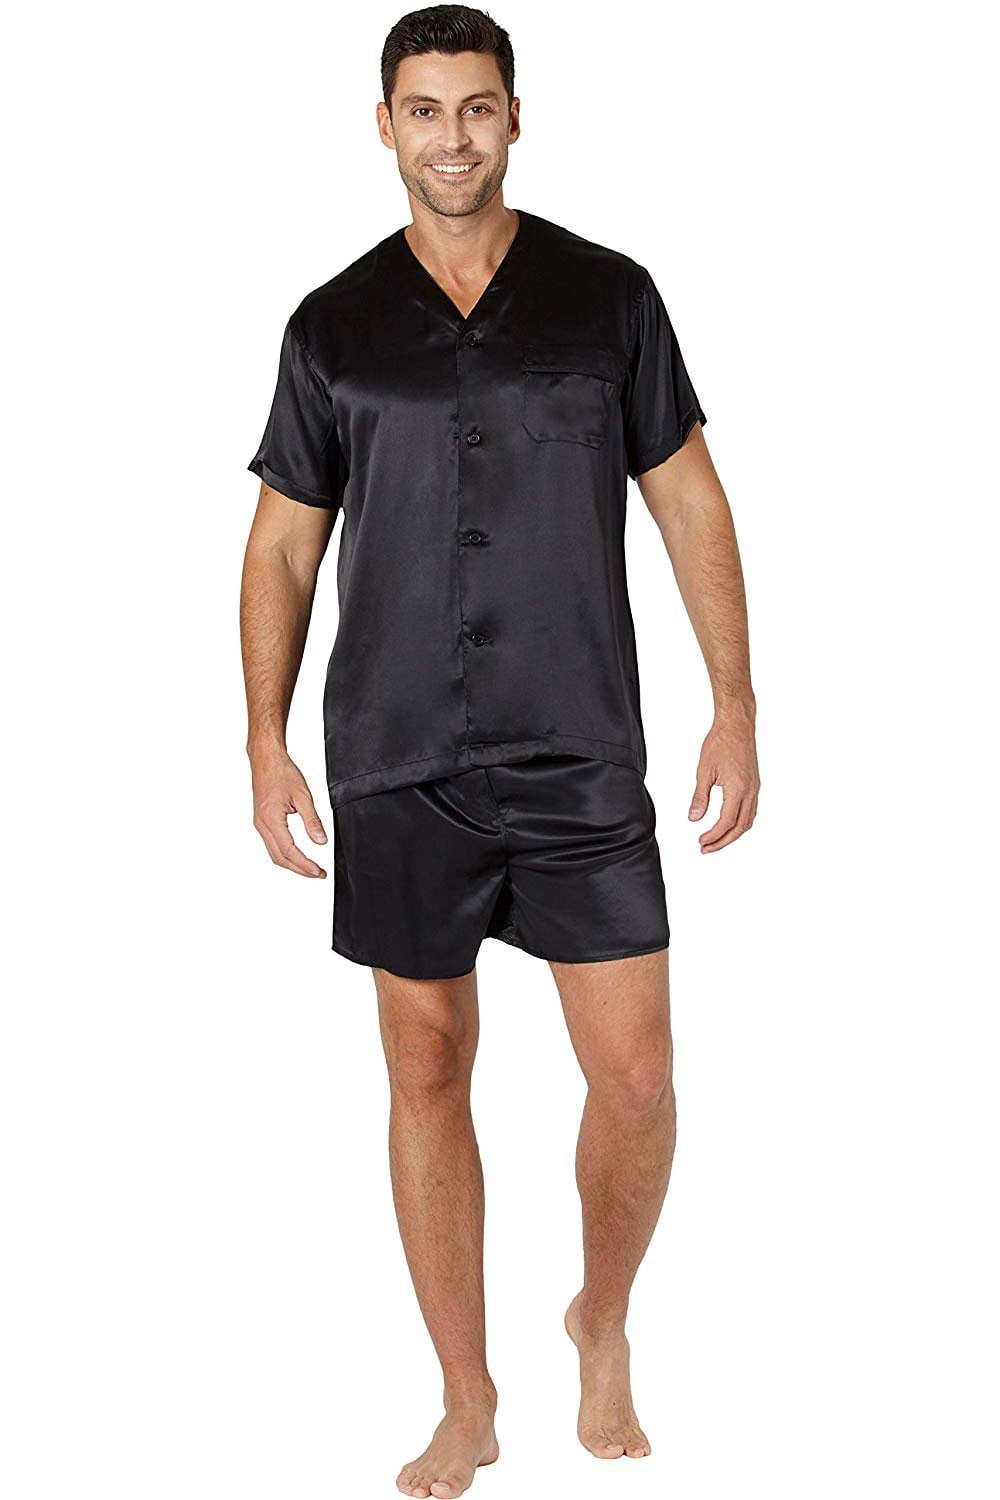 Men's Summer Pyjama Set Short Sleeve Shirt Shorts Pajama by Champion luxury pj's 